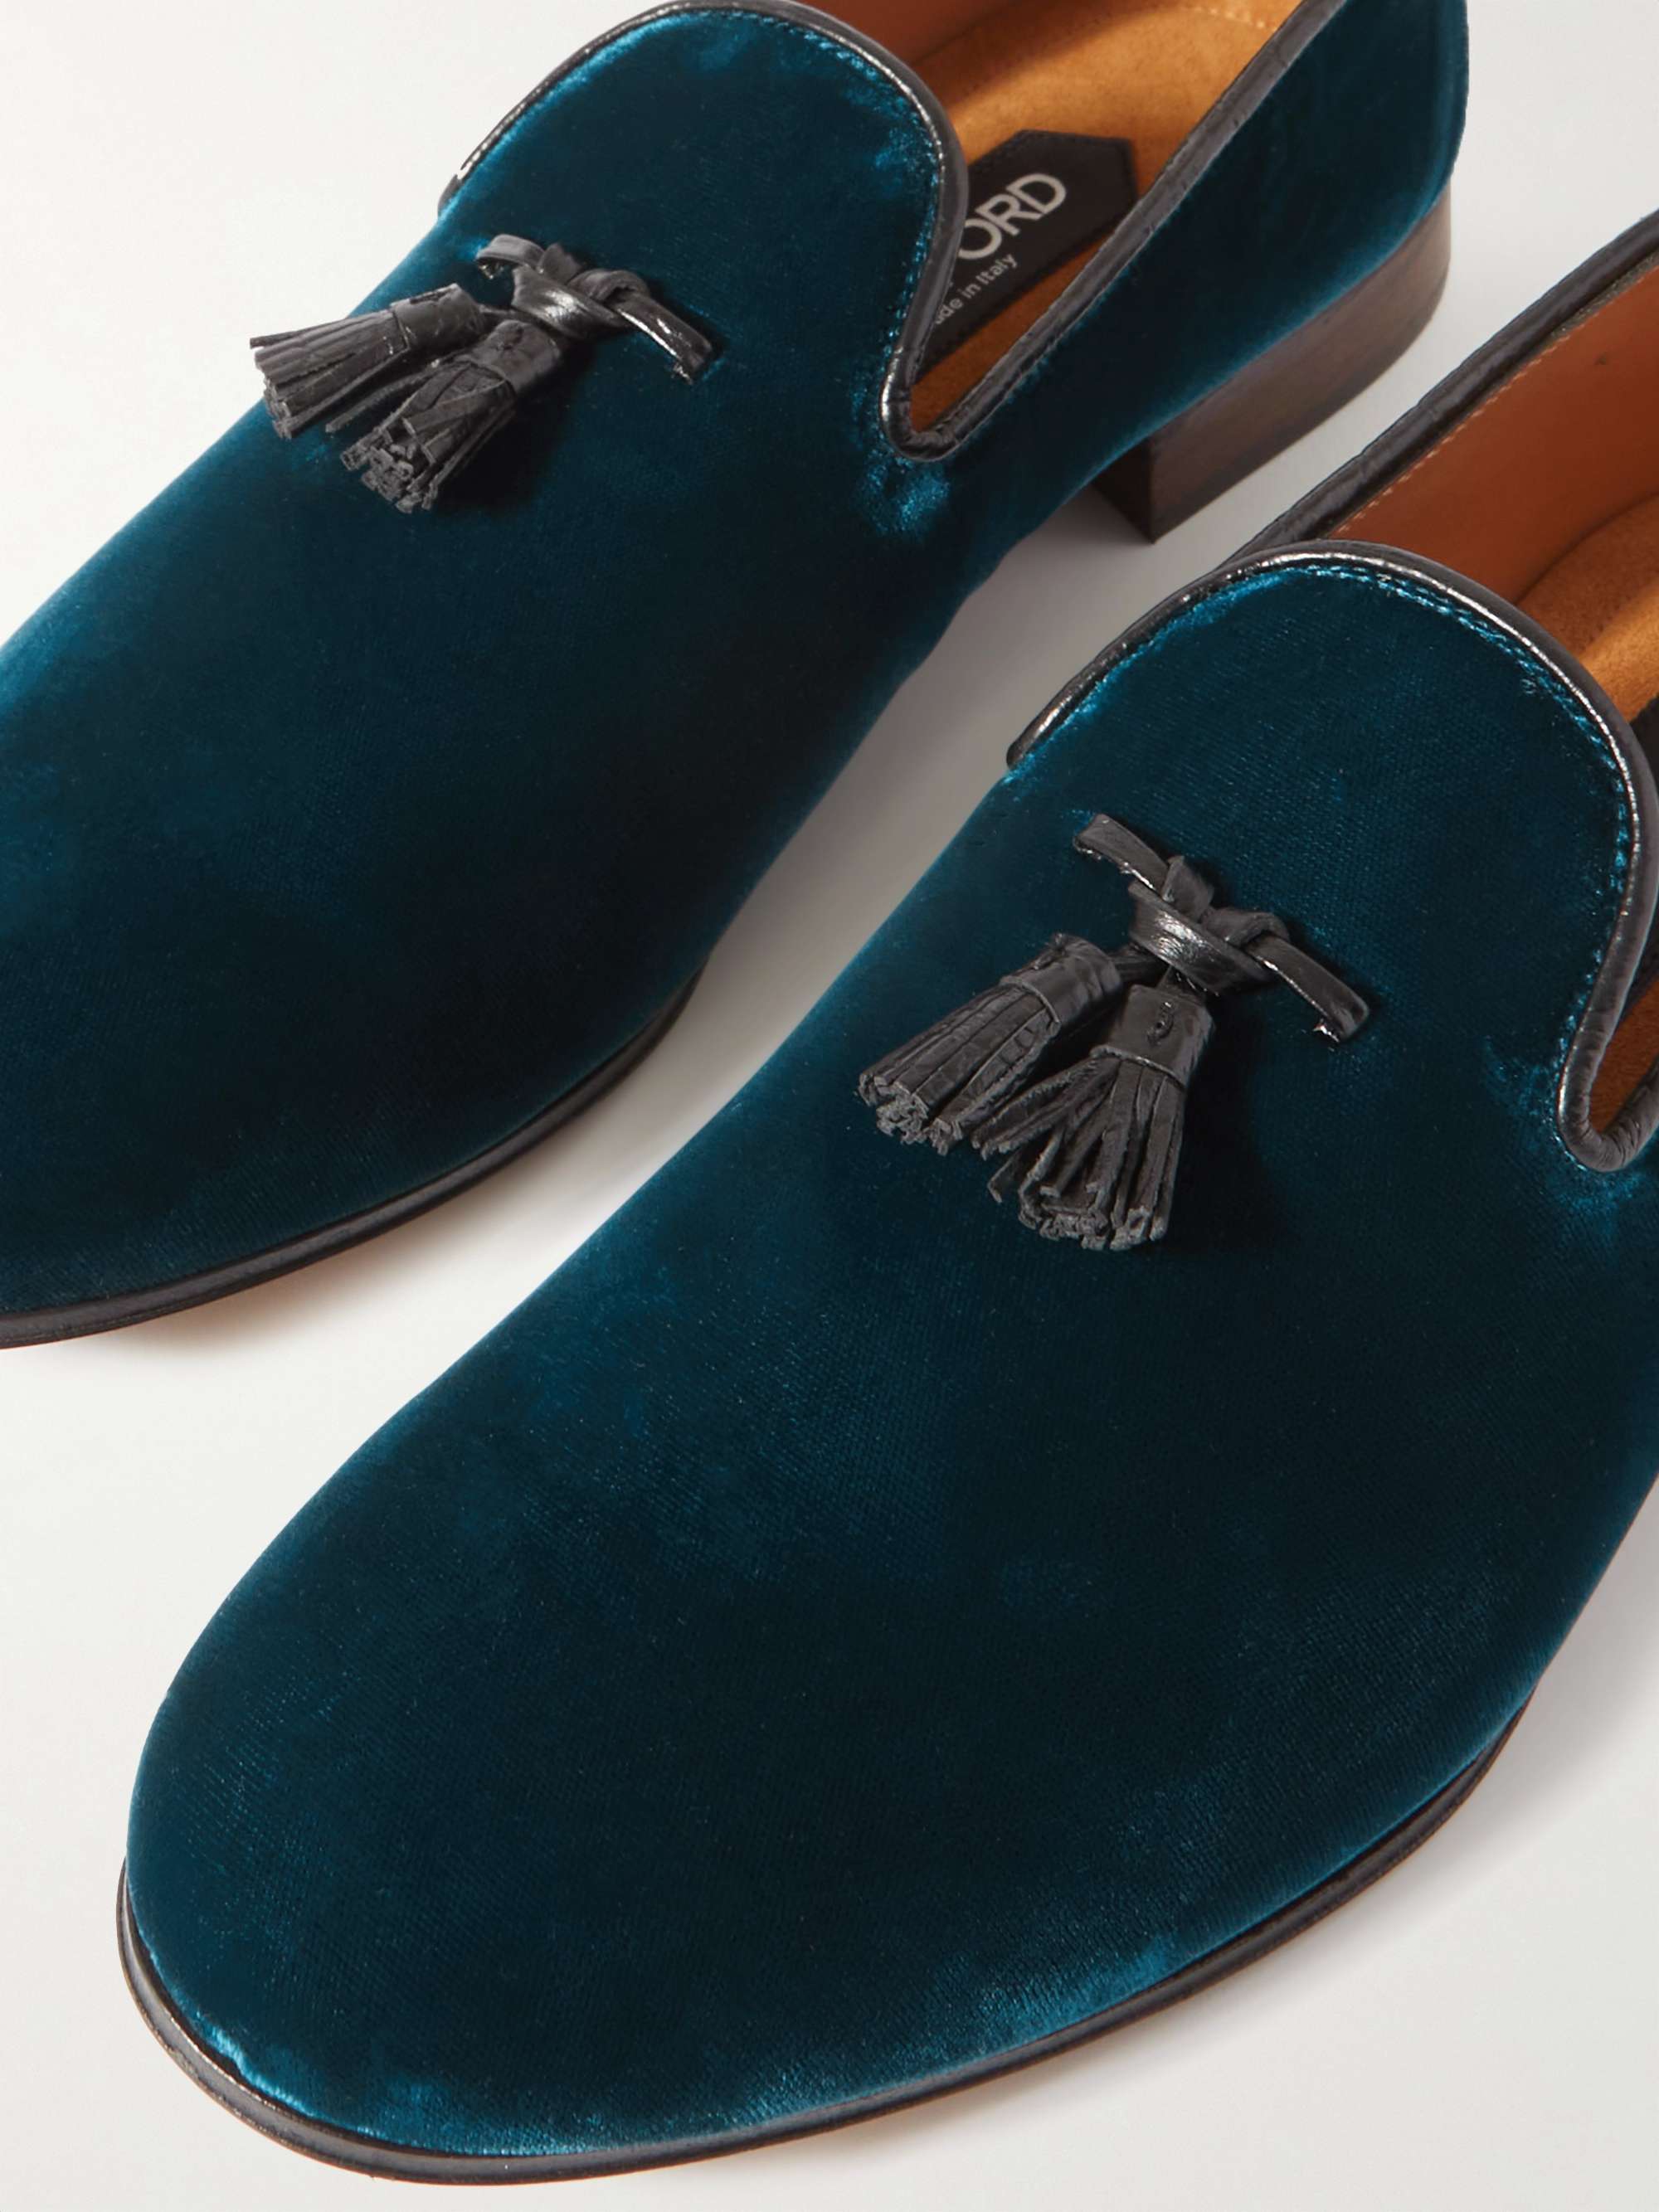 TOM FORD Nicolas Leather-Trimmed Tasselled Velvet Loafers